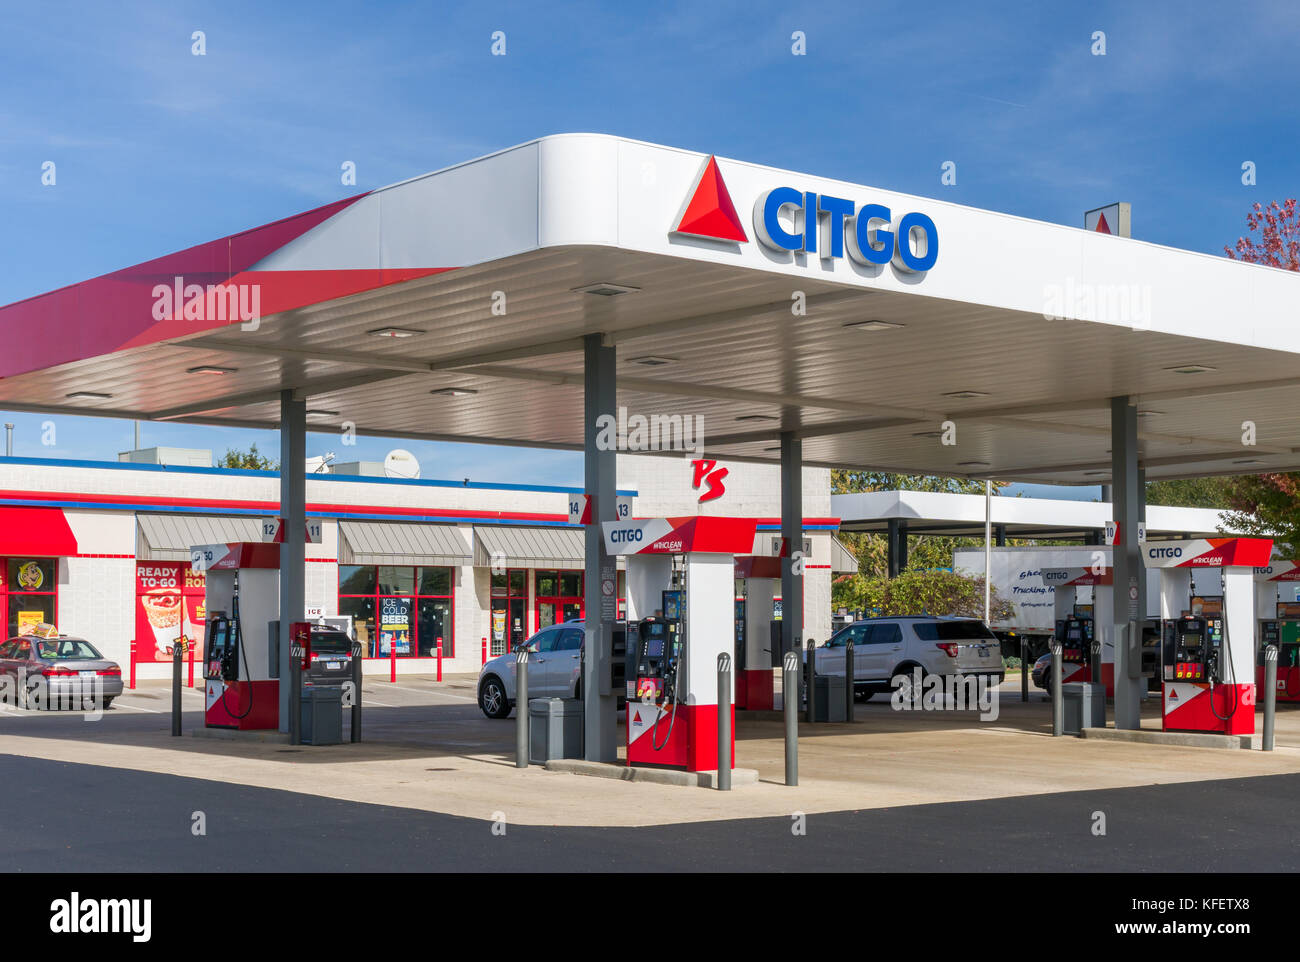 JACKSON, MI/USA - OCTOBER 19, 2017: Citgo gas station exterior and logo. Citgo Petroleum Corporation is a Venezuelan-owned refiner, transporter and ma Stock Photo